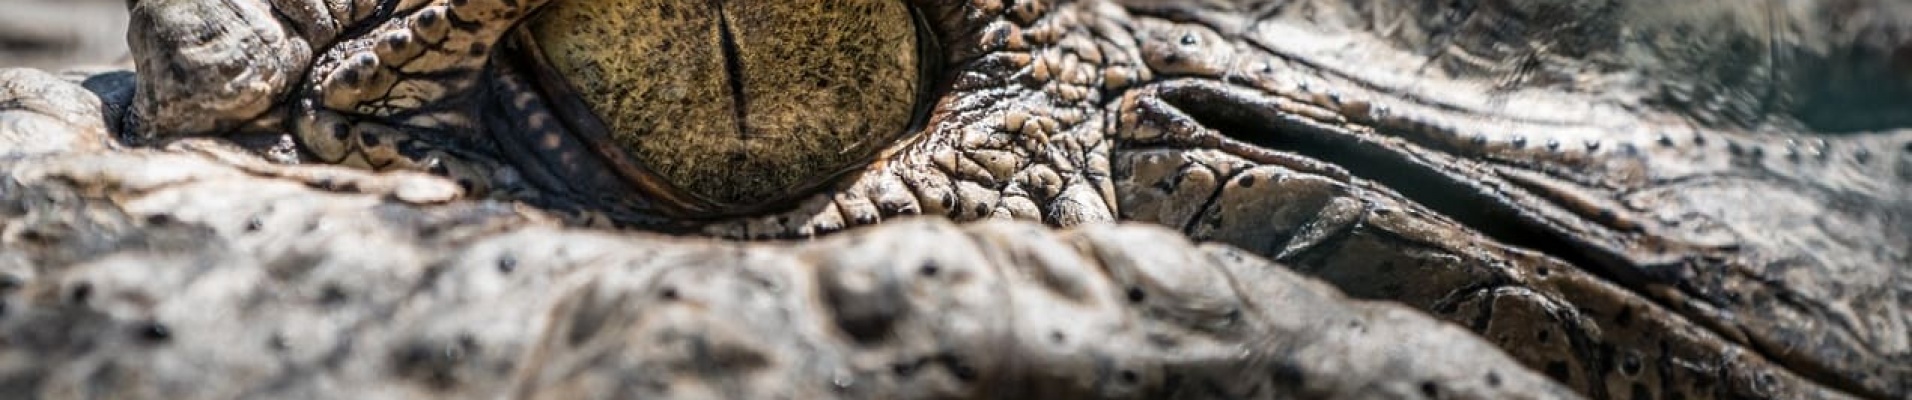 crocodile Australie